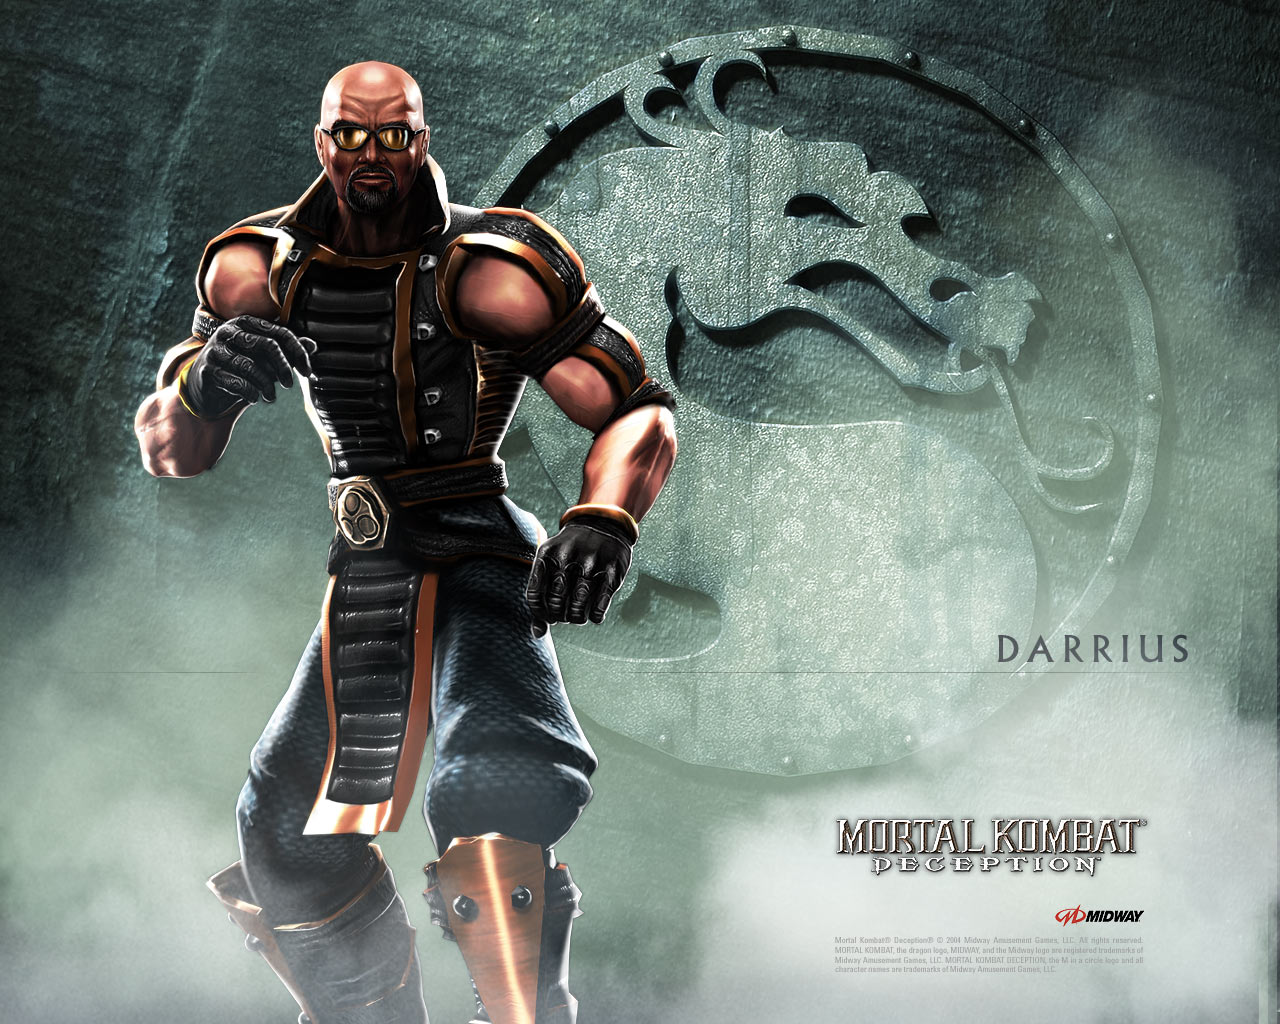 Action Figure Imagery Toy Reviews: Mortal Kombat Deception Baraka